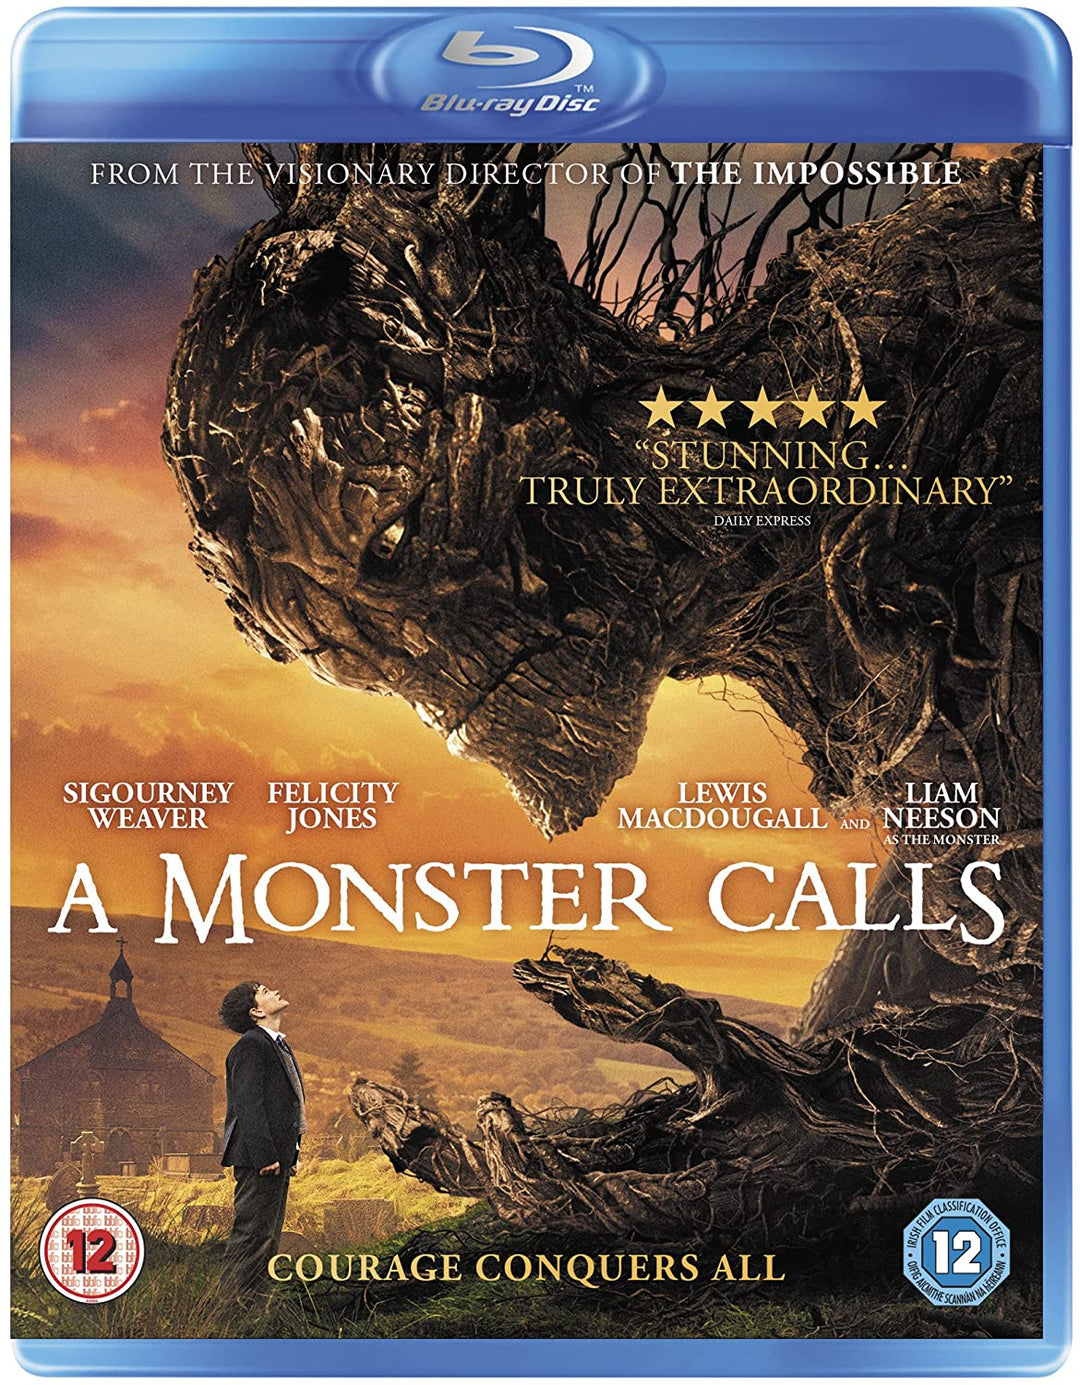 A Monster Calls - Fantasy/Drama [Blu-Ray]